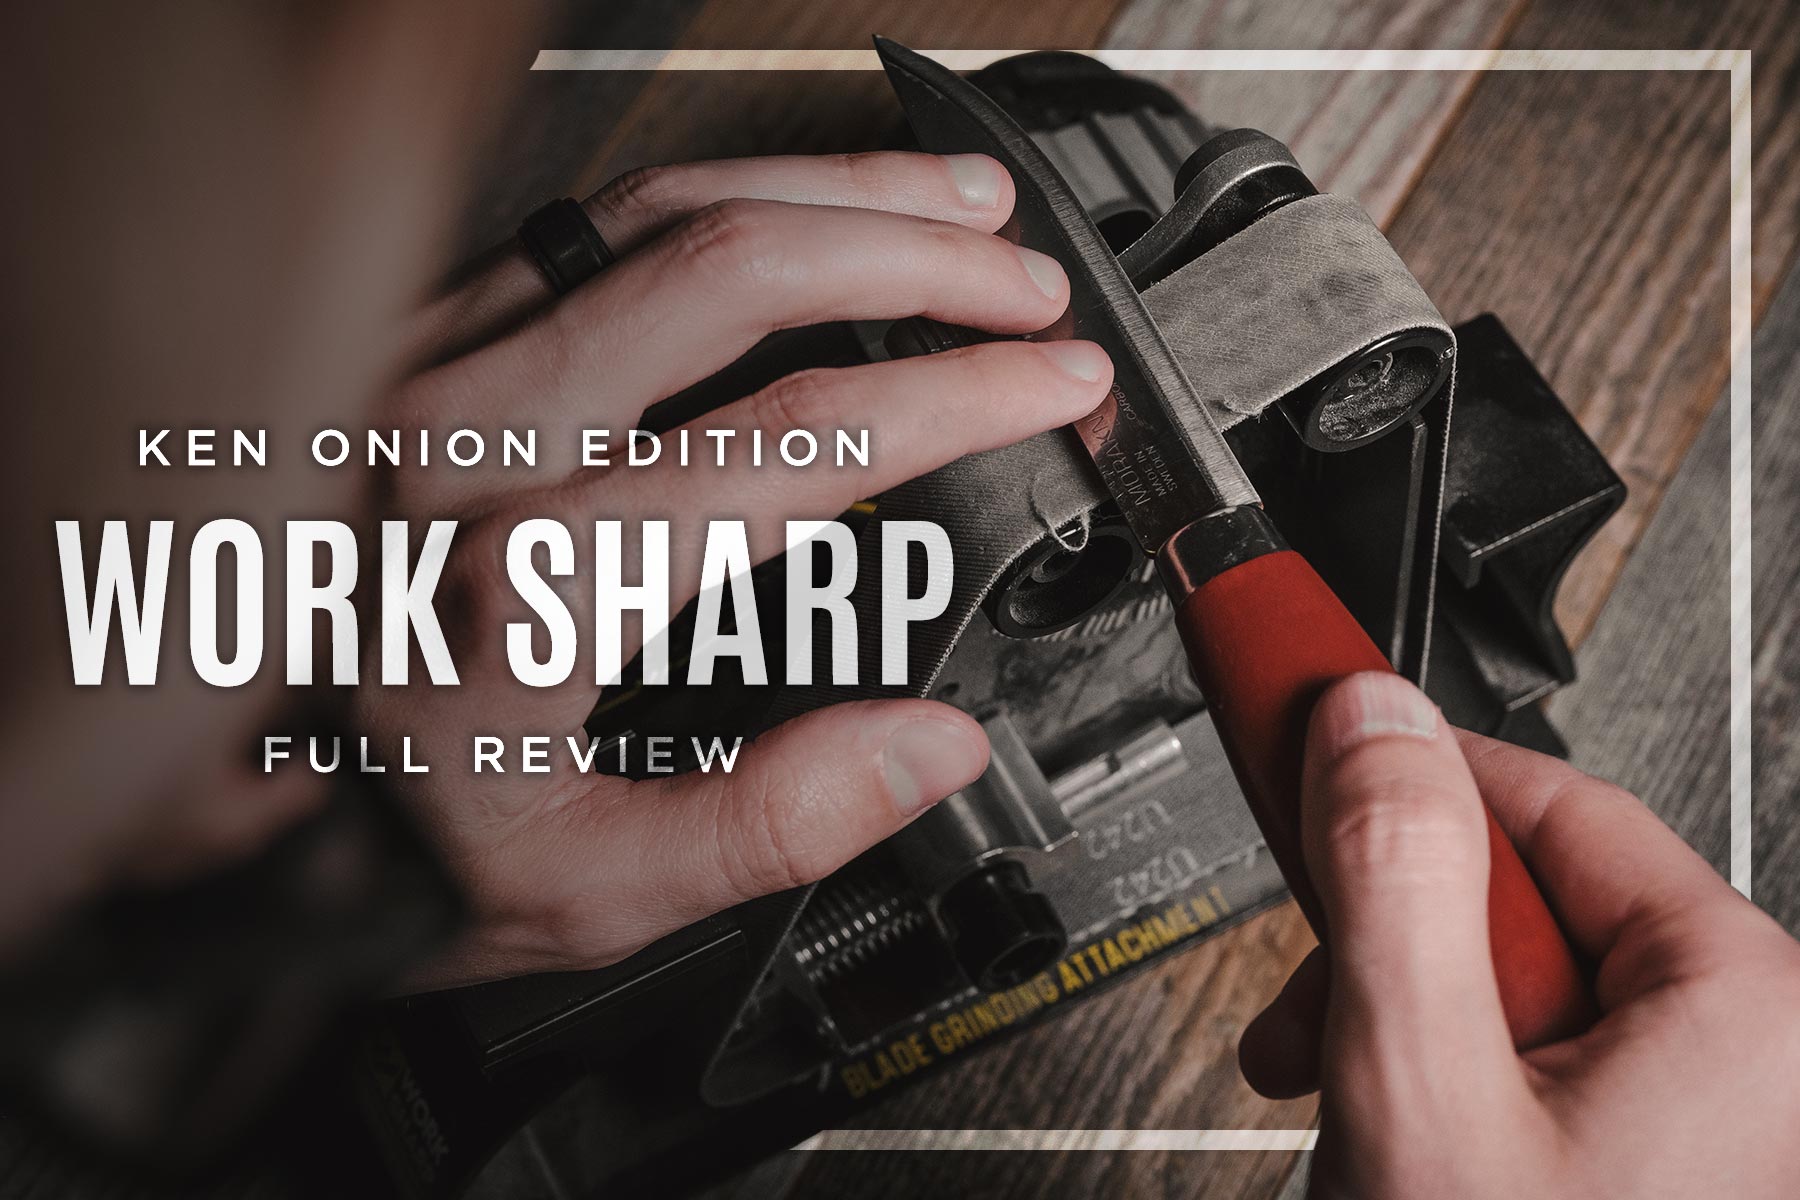 https://anthonyawaken.com/wp-content/uploads/2019/05/ken-onion-edition-worksharp-review.jpg